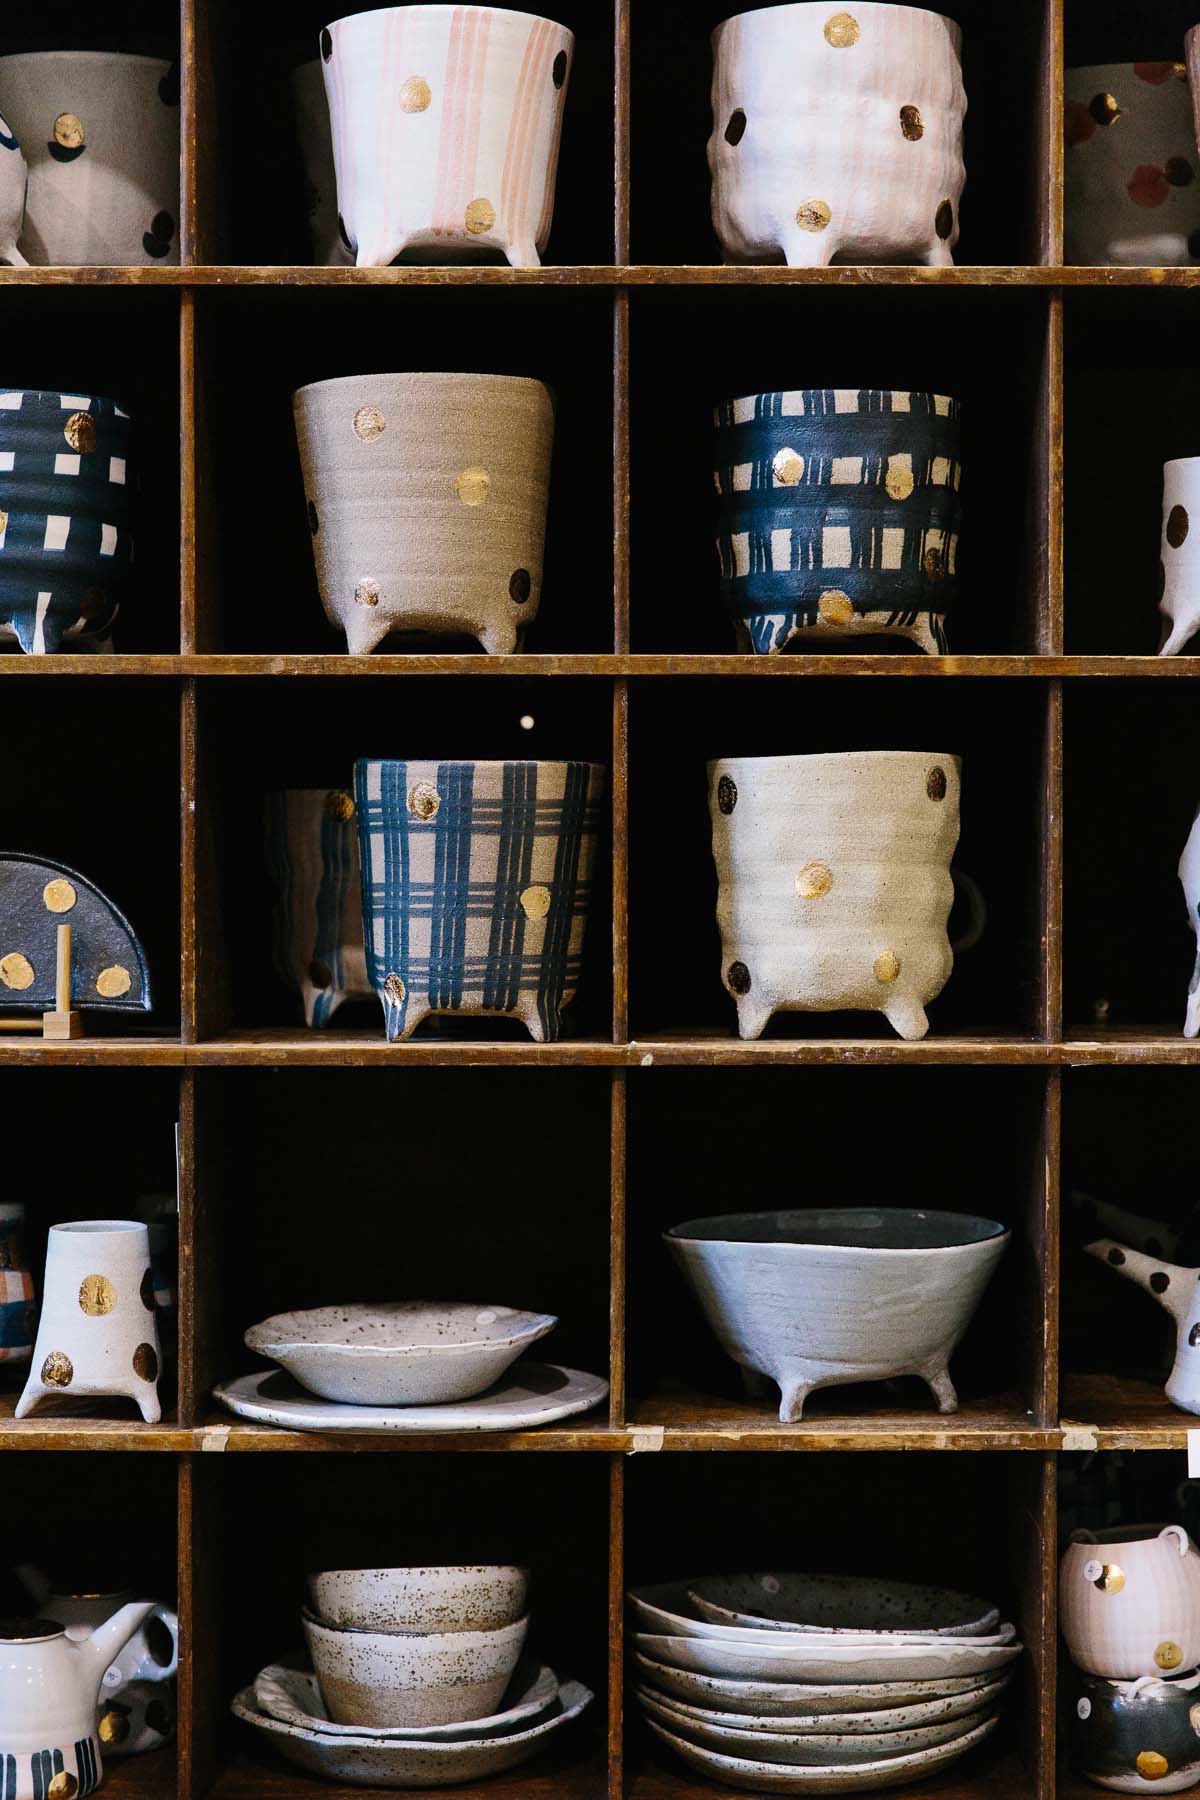 Ceramics by Bridget Bodenham on wooden shelving